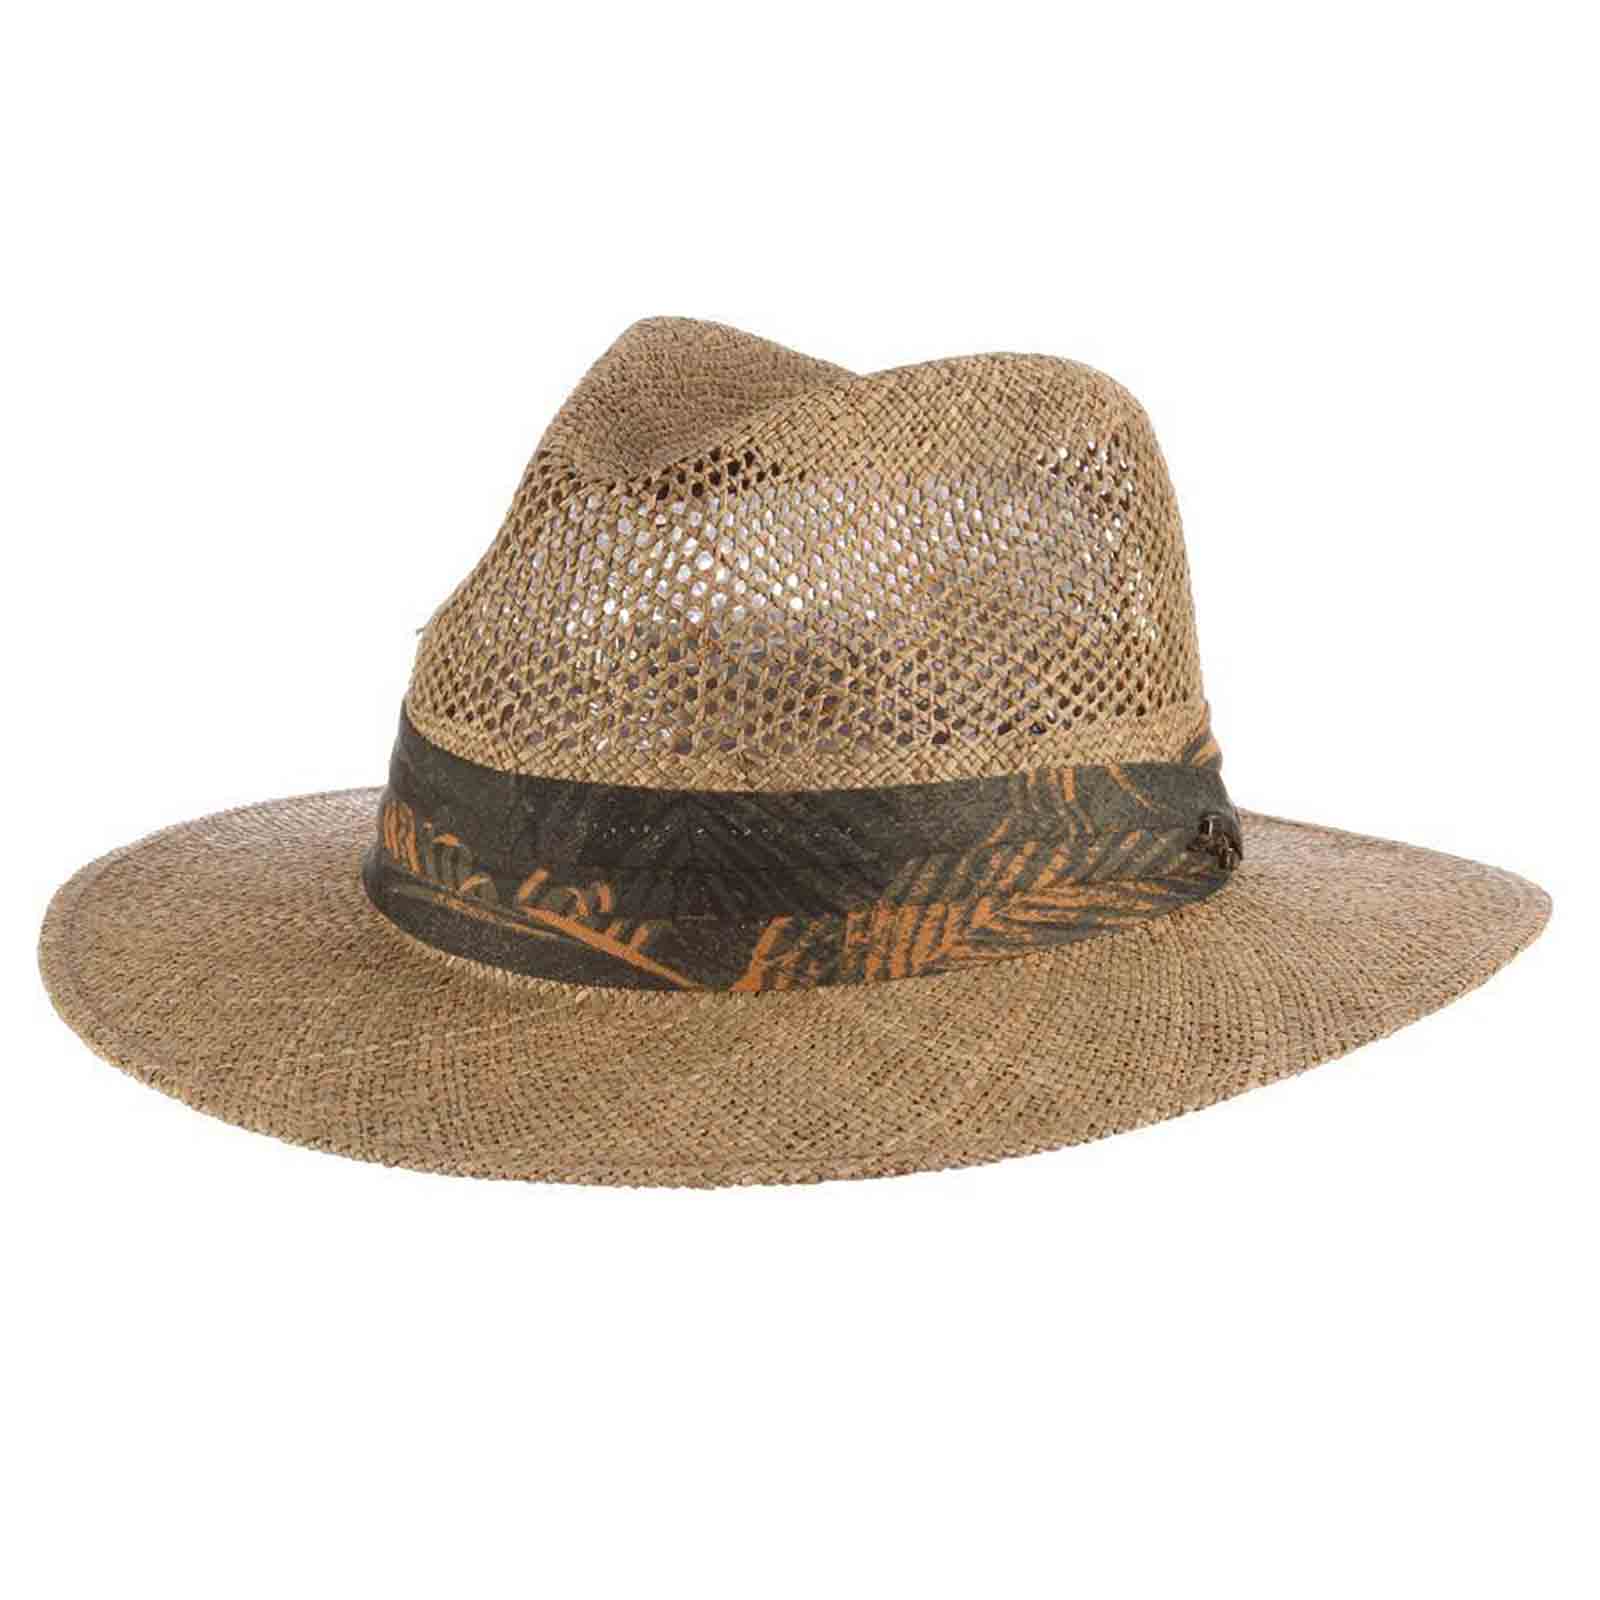 tommy bahama coolmax hat